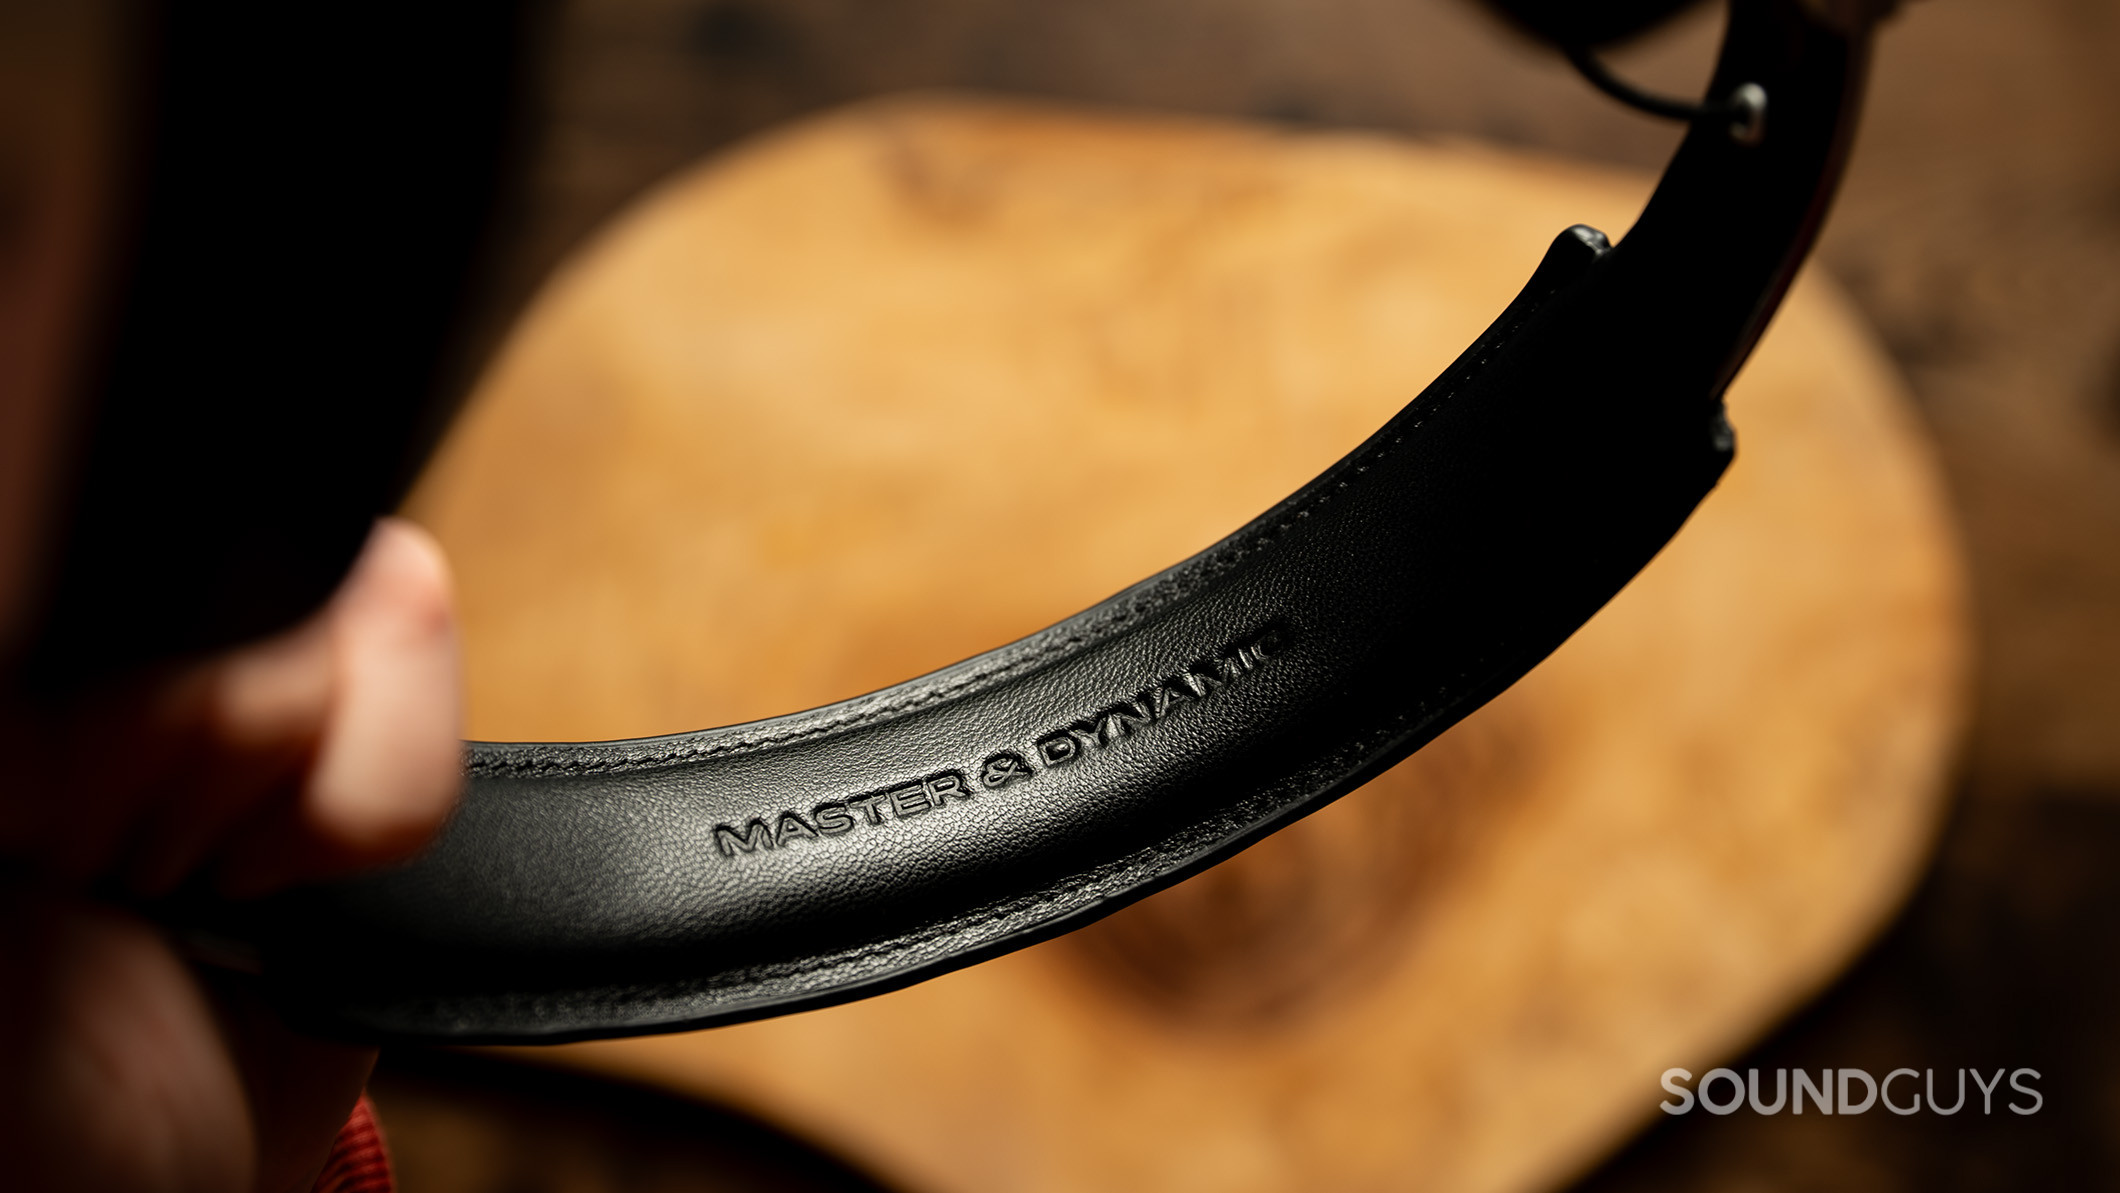 A closeup of the Master &amp; Dynamic headband showing the Master &amp; Dynamic logo. 